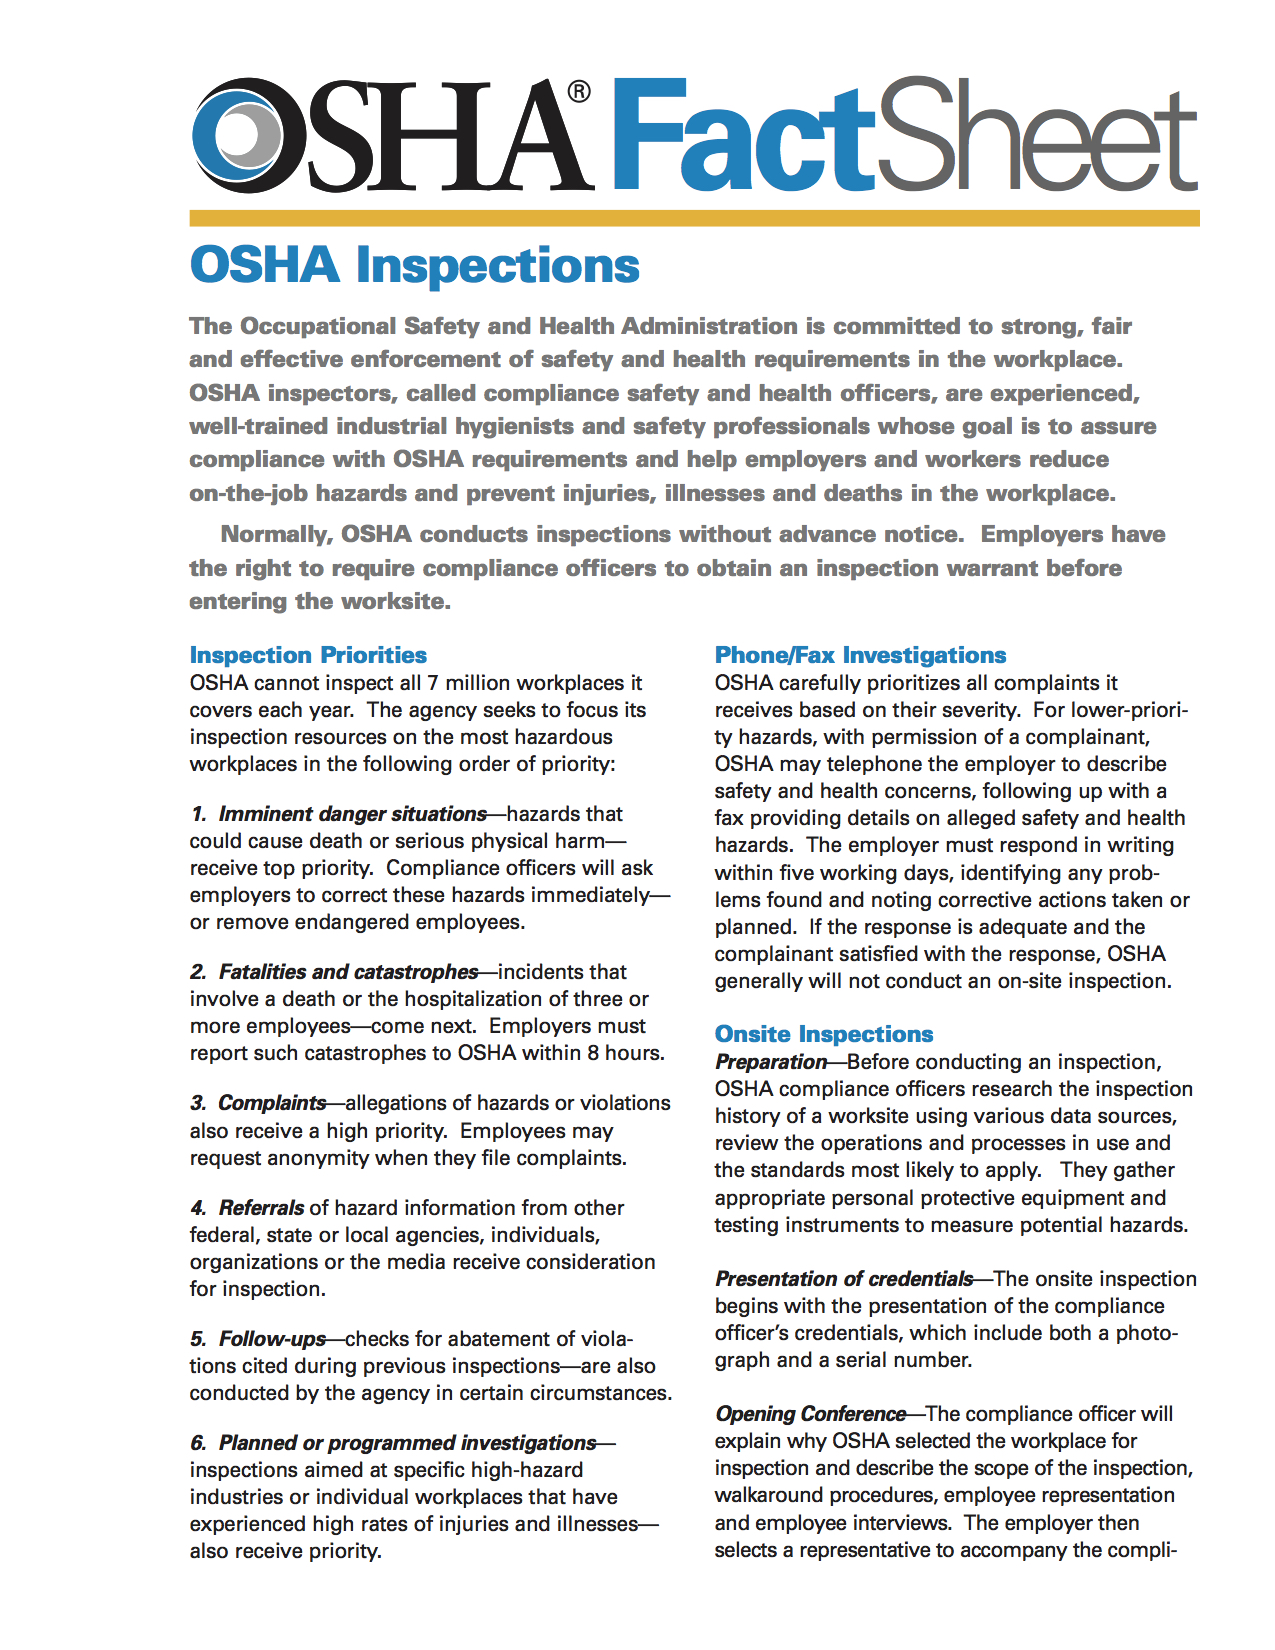 OSHA Inspections - Fact Sheet